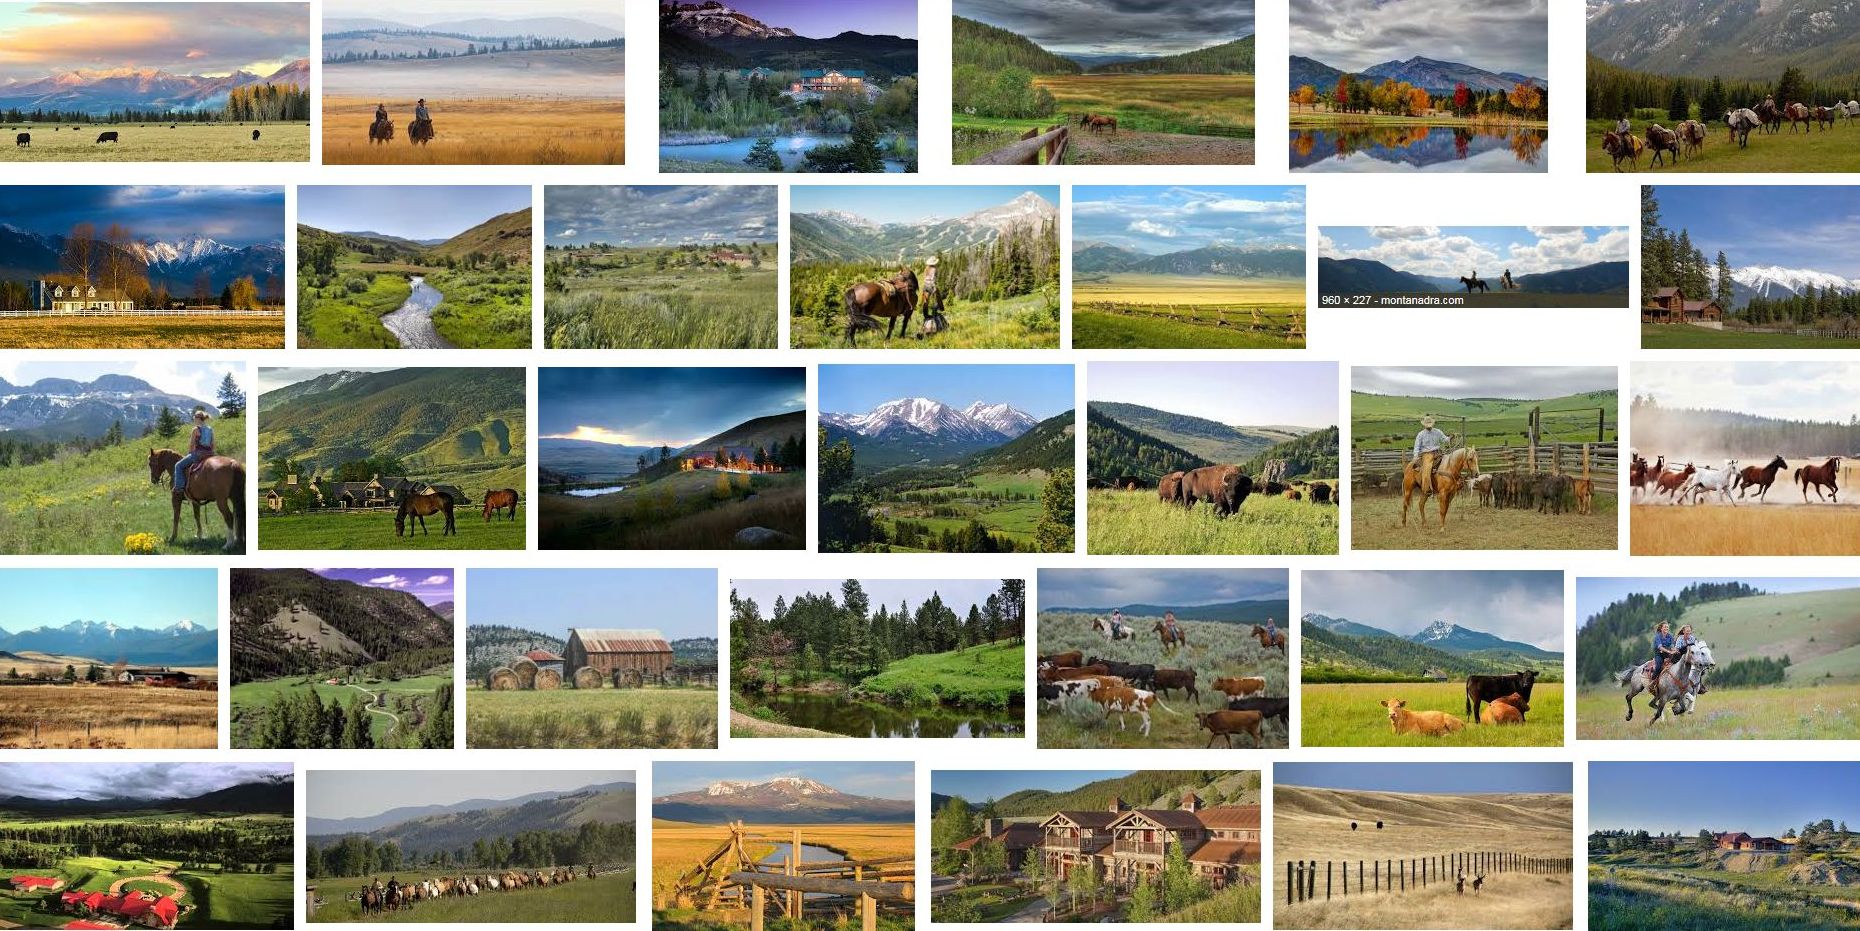 Montana Ranch Listings $600,000 To $700,000